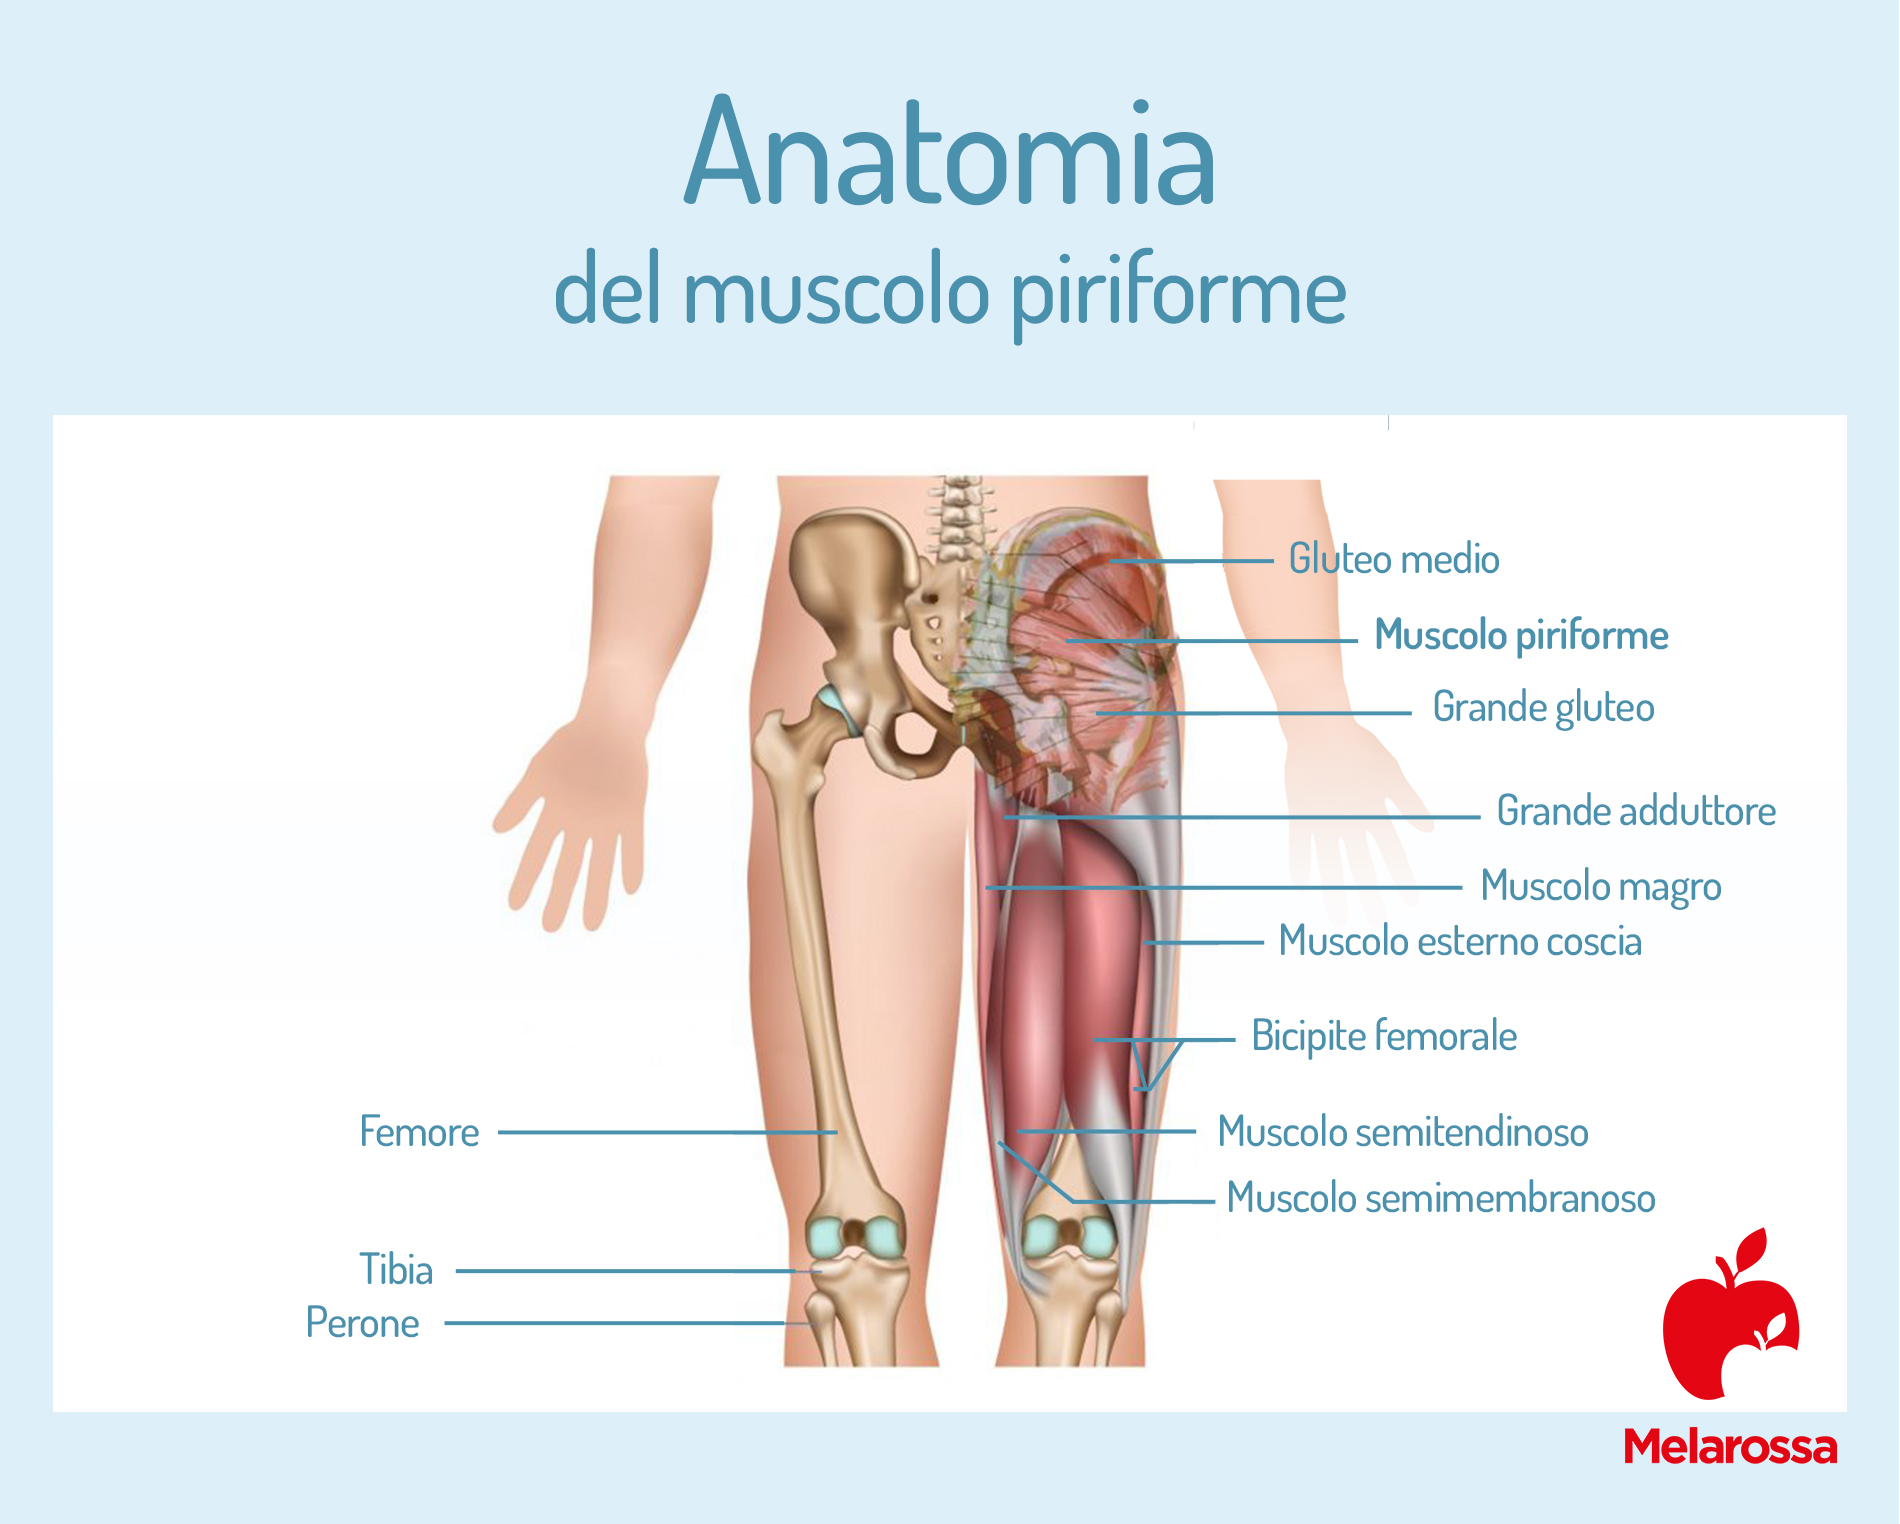 Muscolo piriforme: anatomia